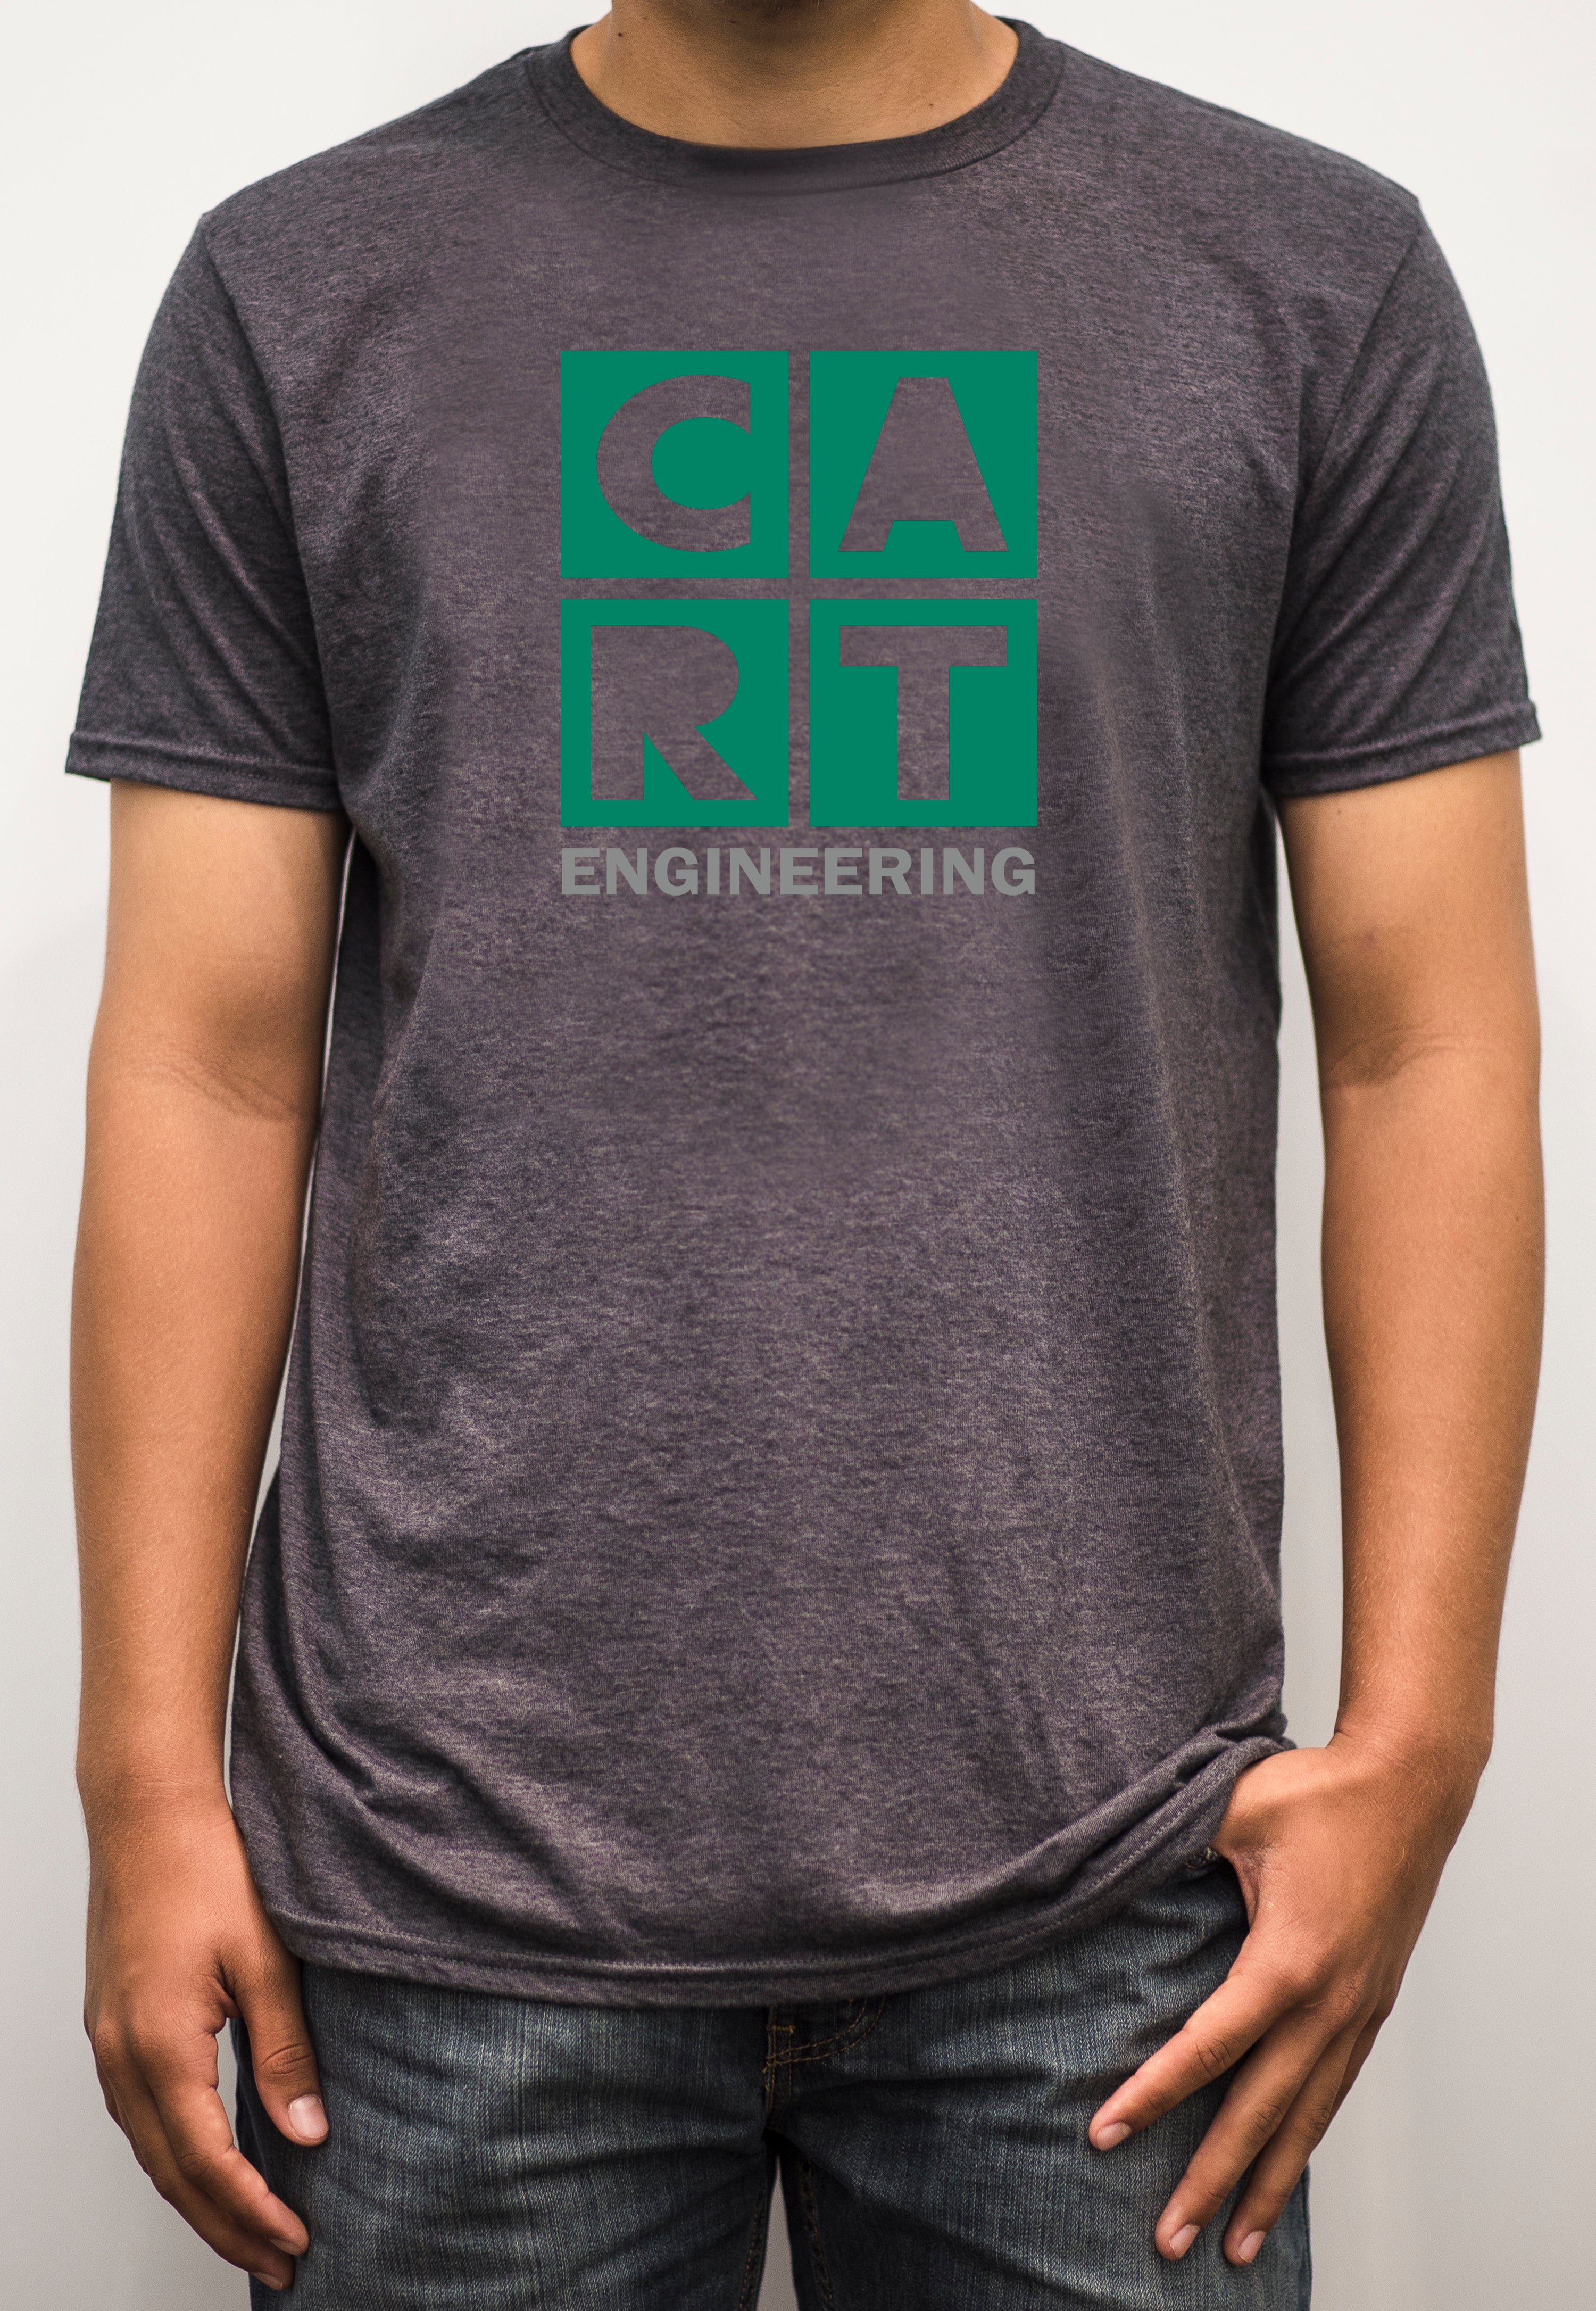 Short sleeve t-shirt - engineering grey/green